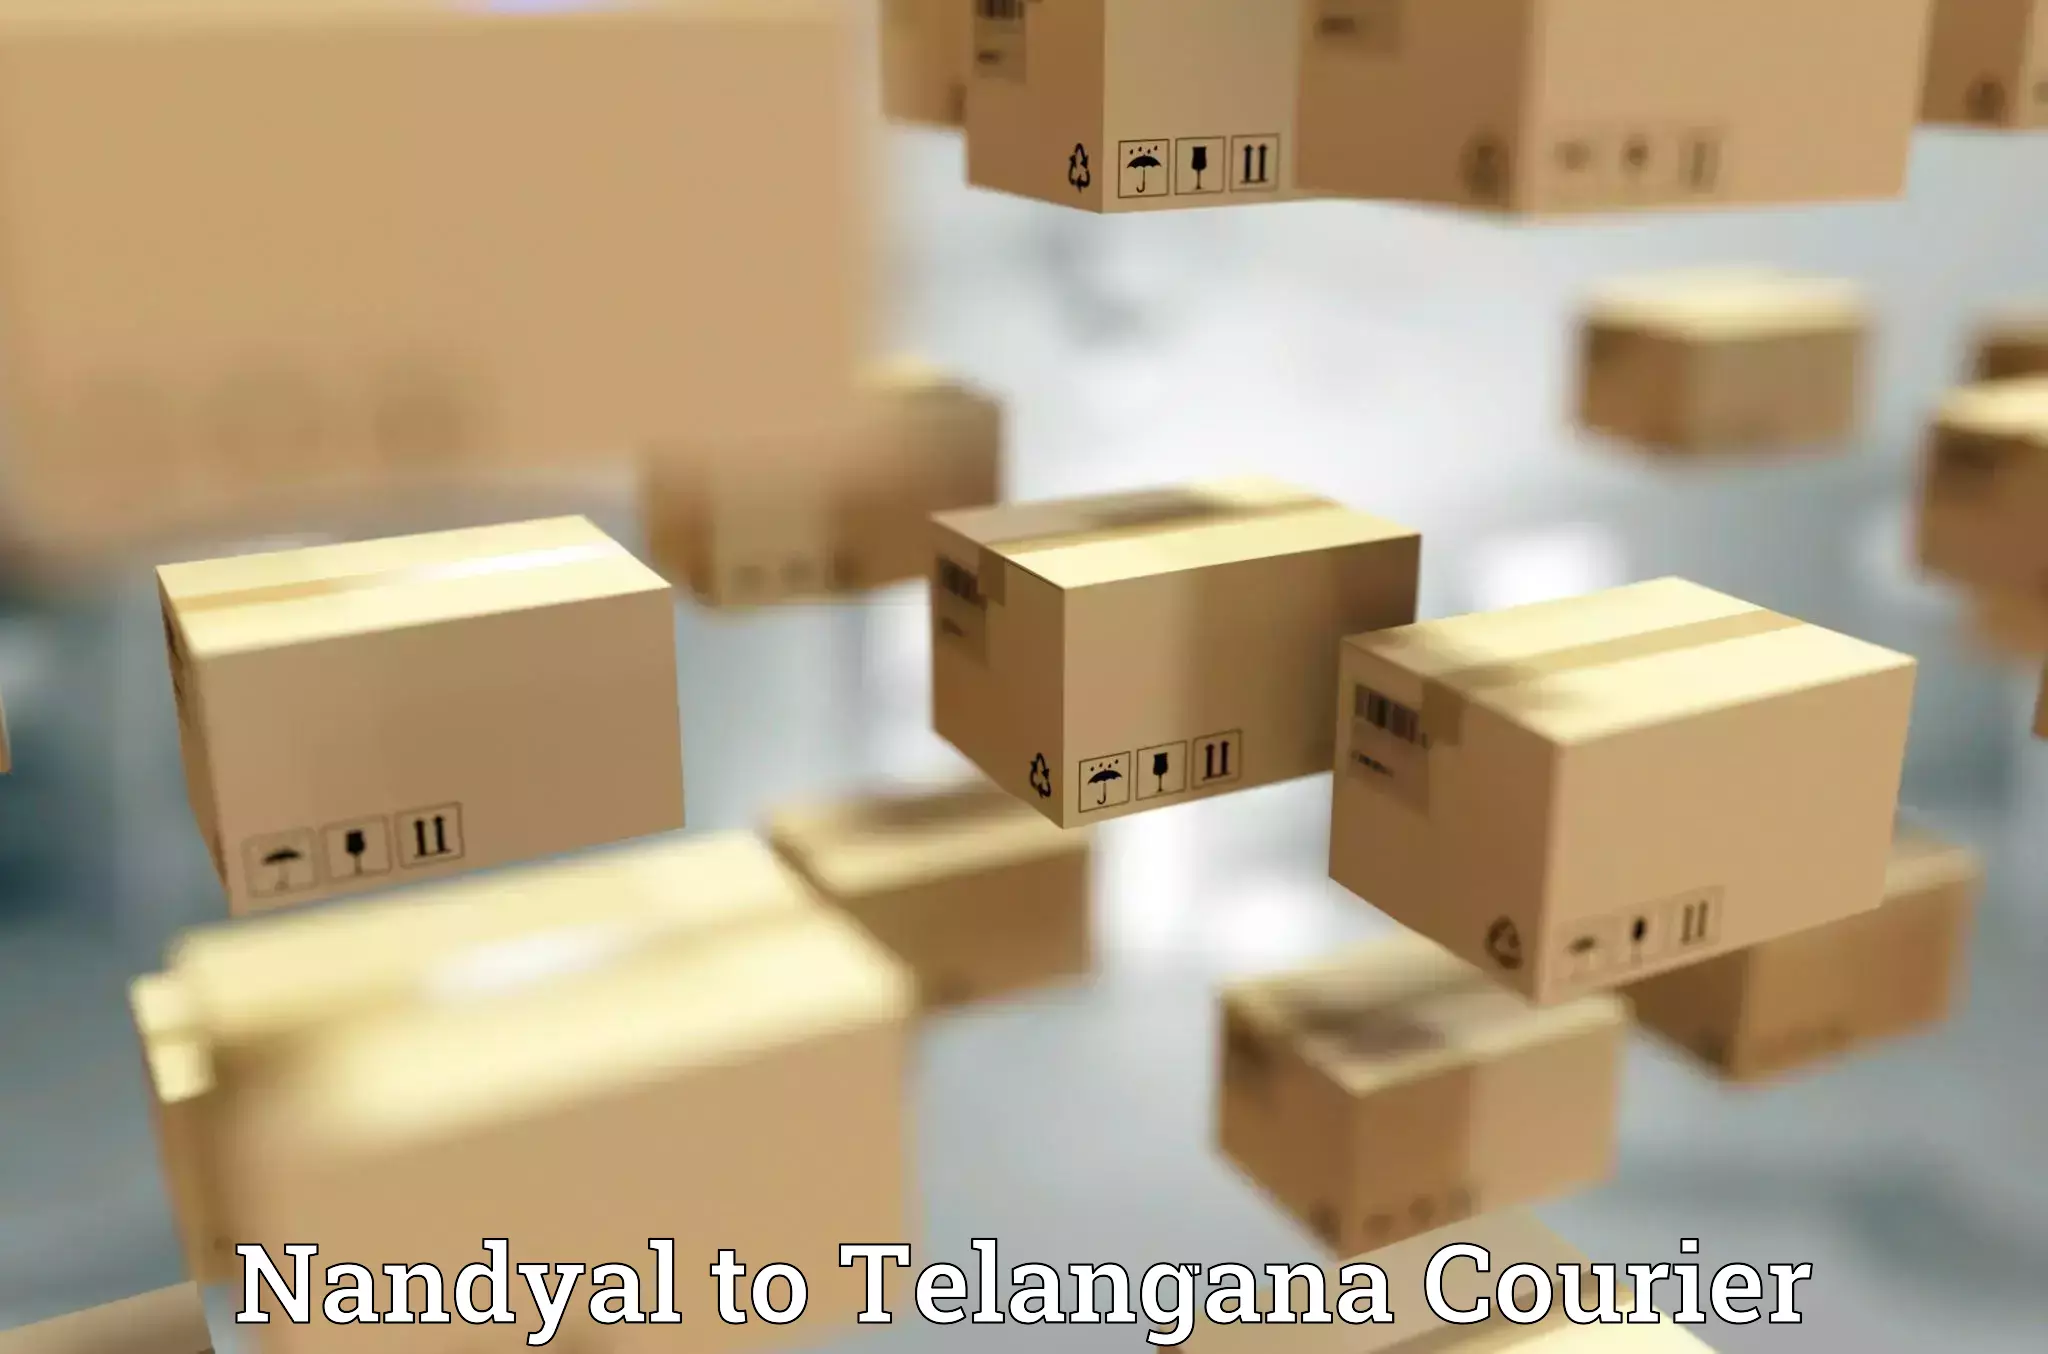 Digital courier platforms Nandyal to Gollapalli